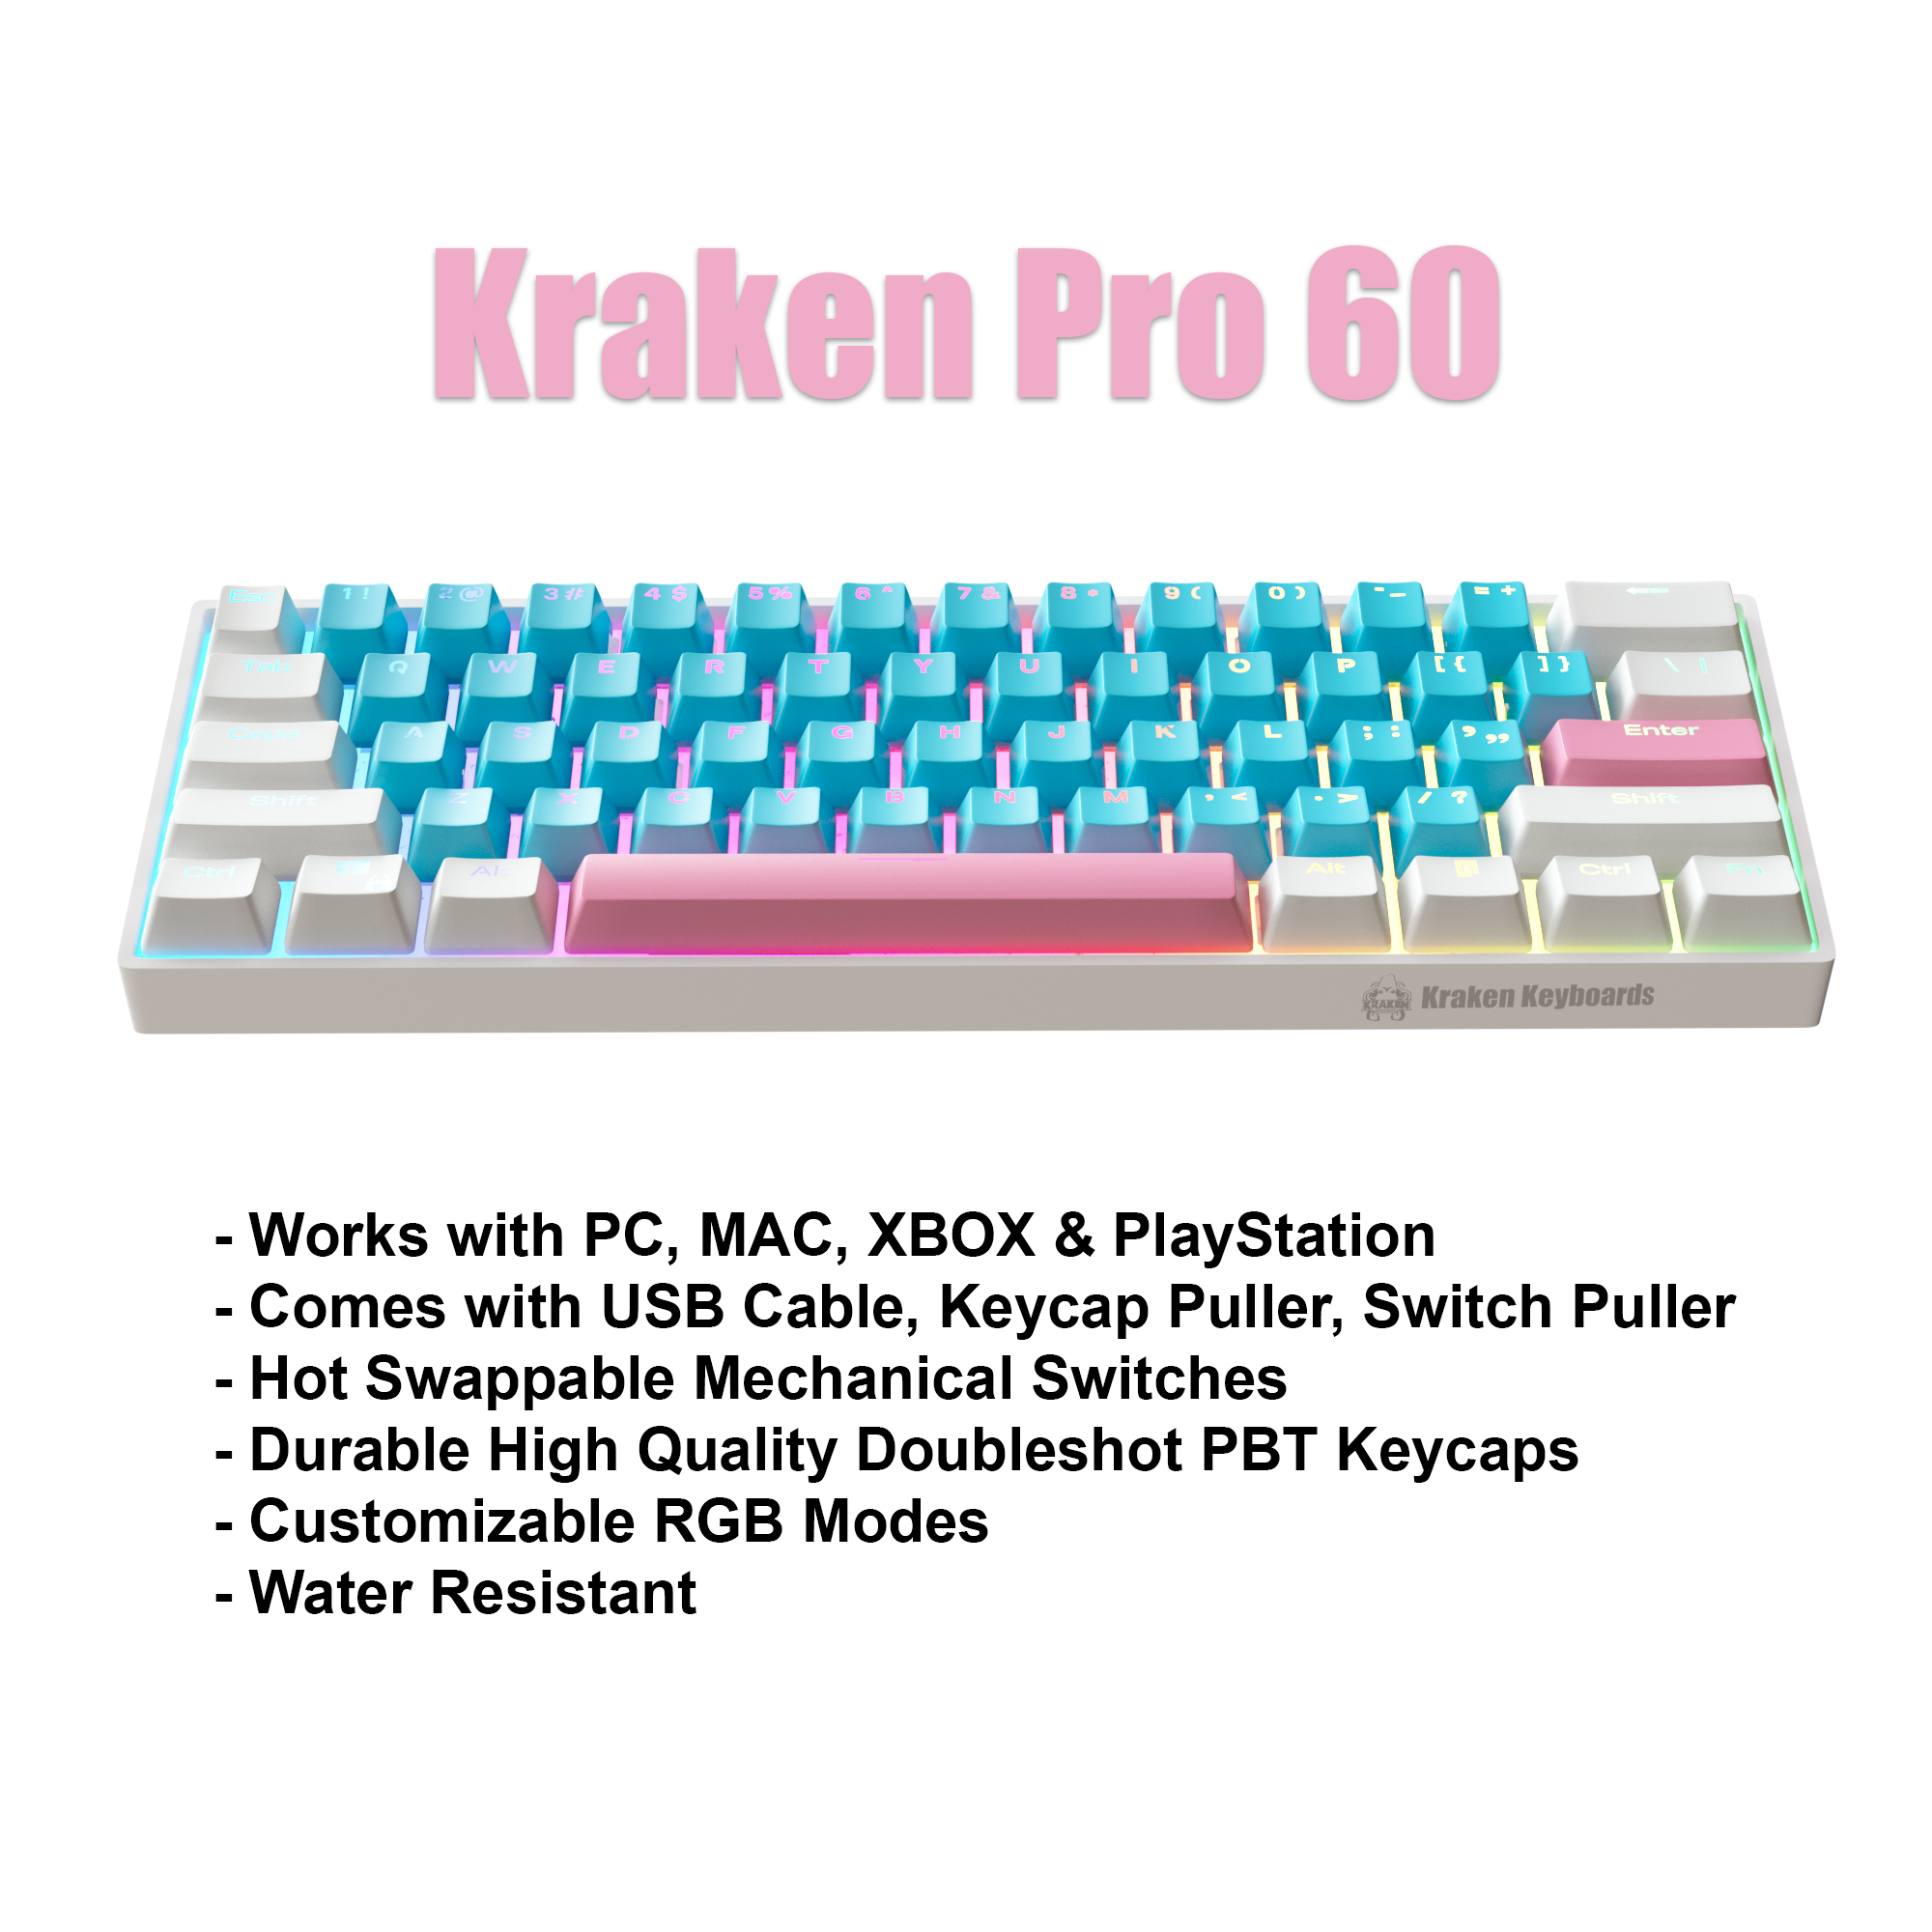 CANDY PAINT EDITION - Kraken Pro 60% Mechanical Keyboard